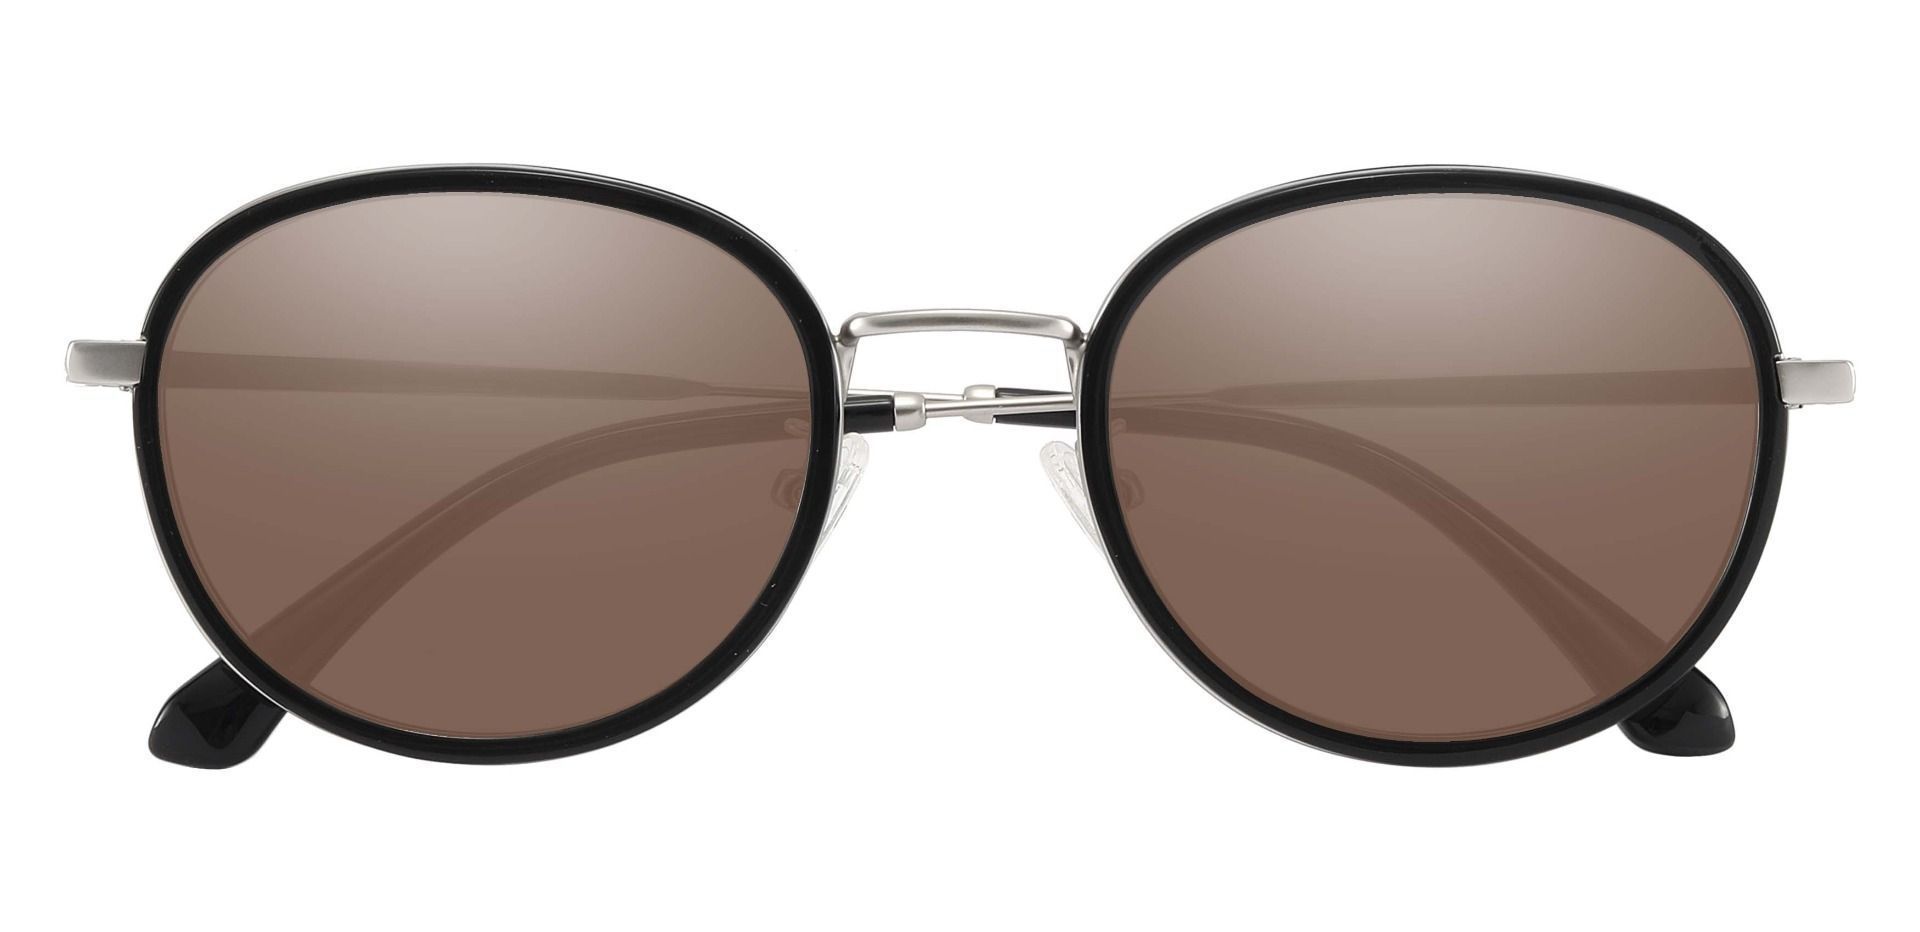 Edmore Oval Lined Bifocal Sunglasses - Black Frame With Brown Lenses